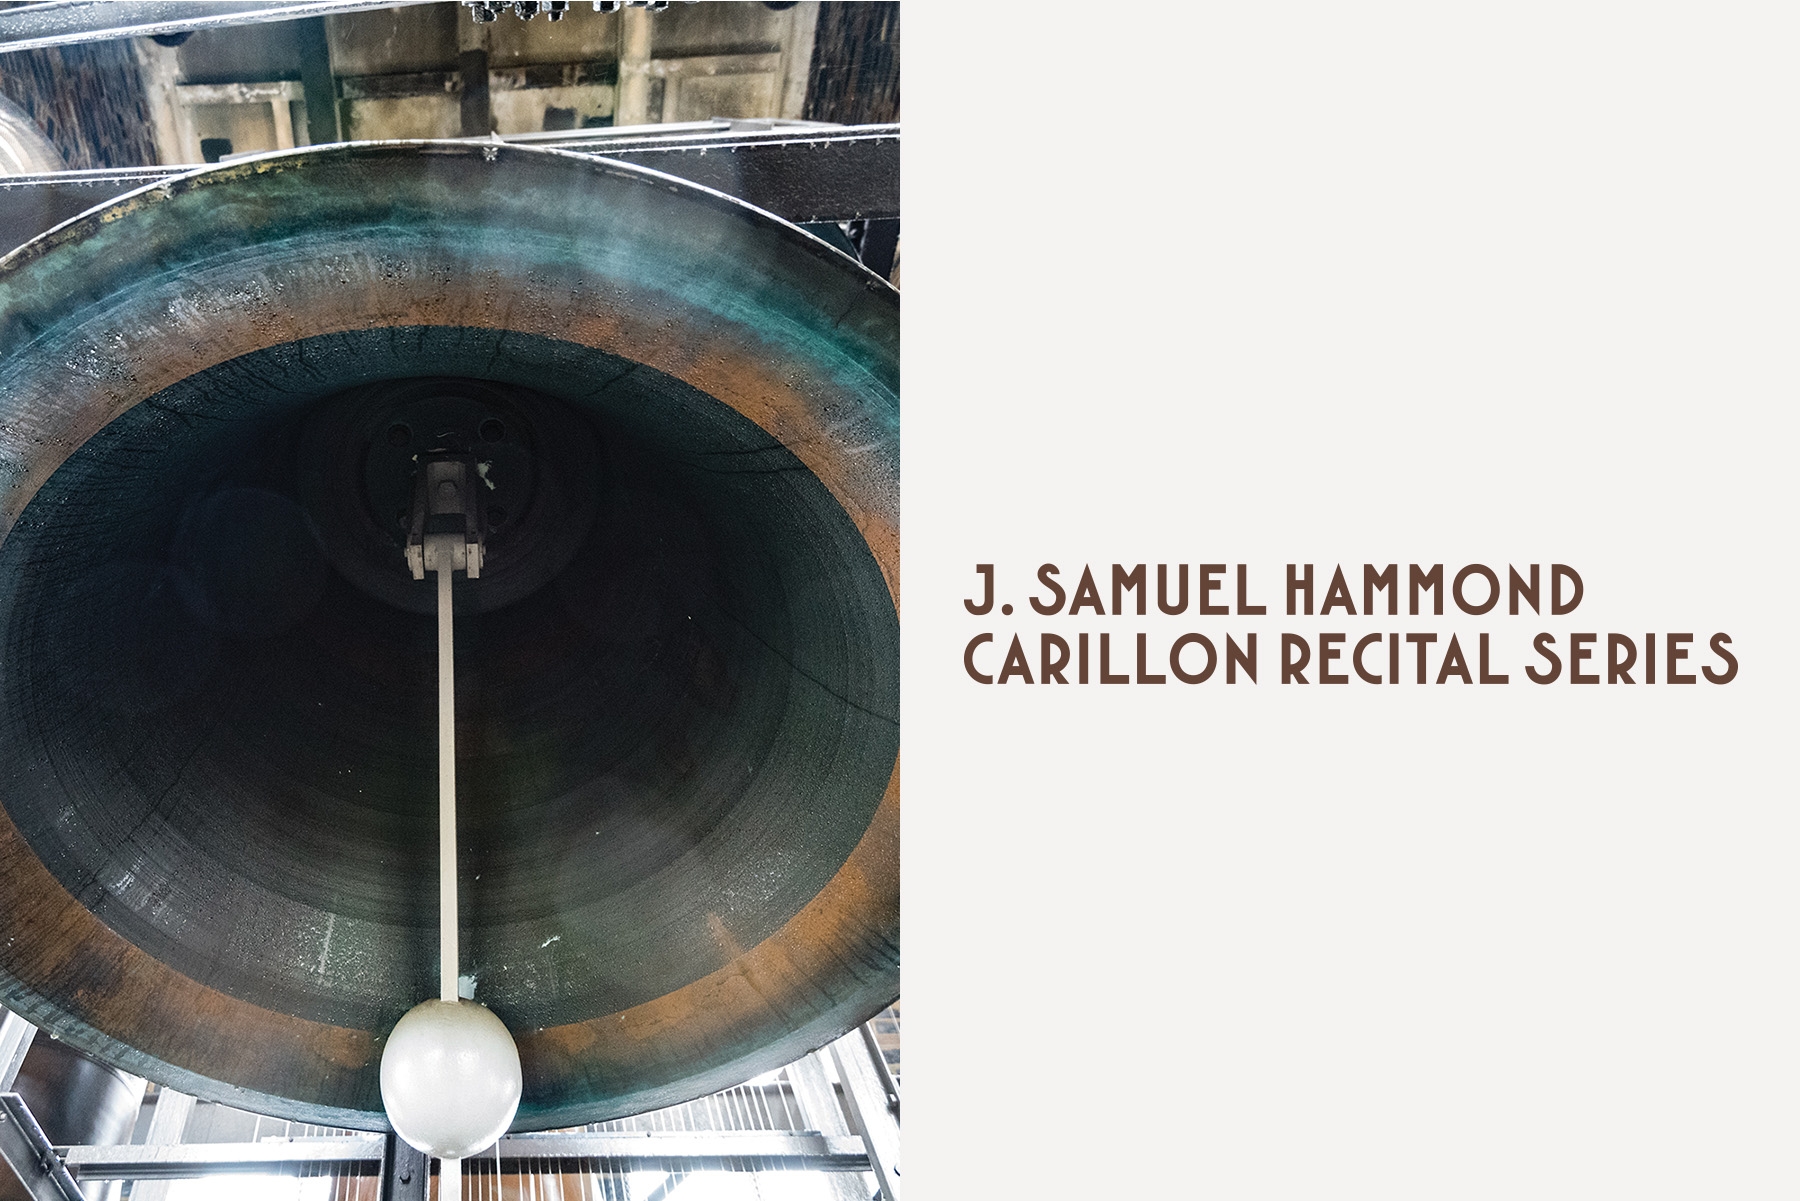 J. Samuel Hammond Carillon Series